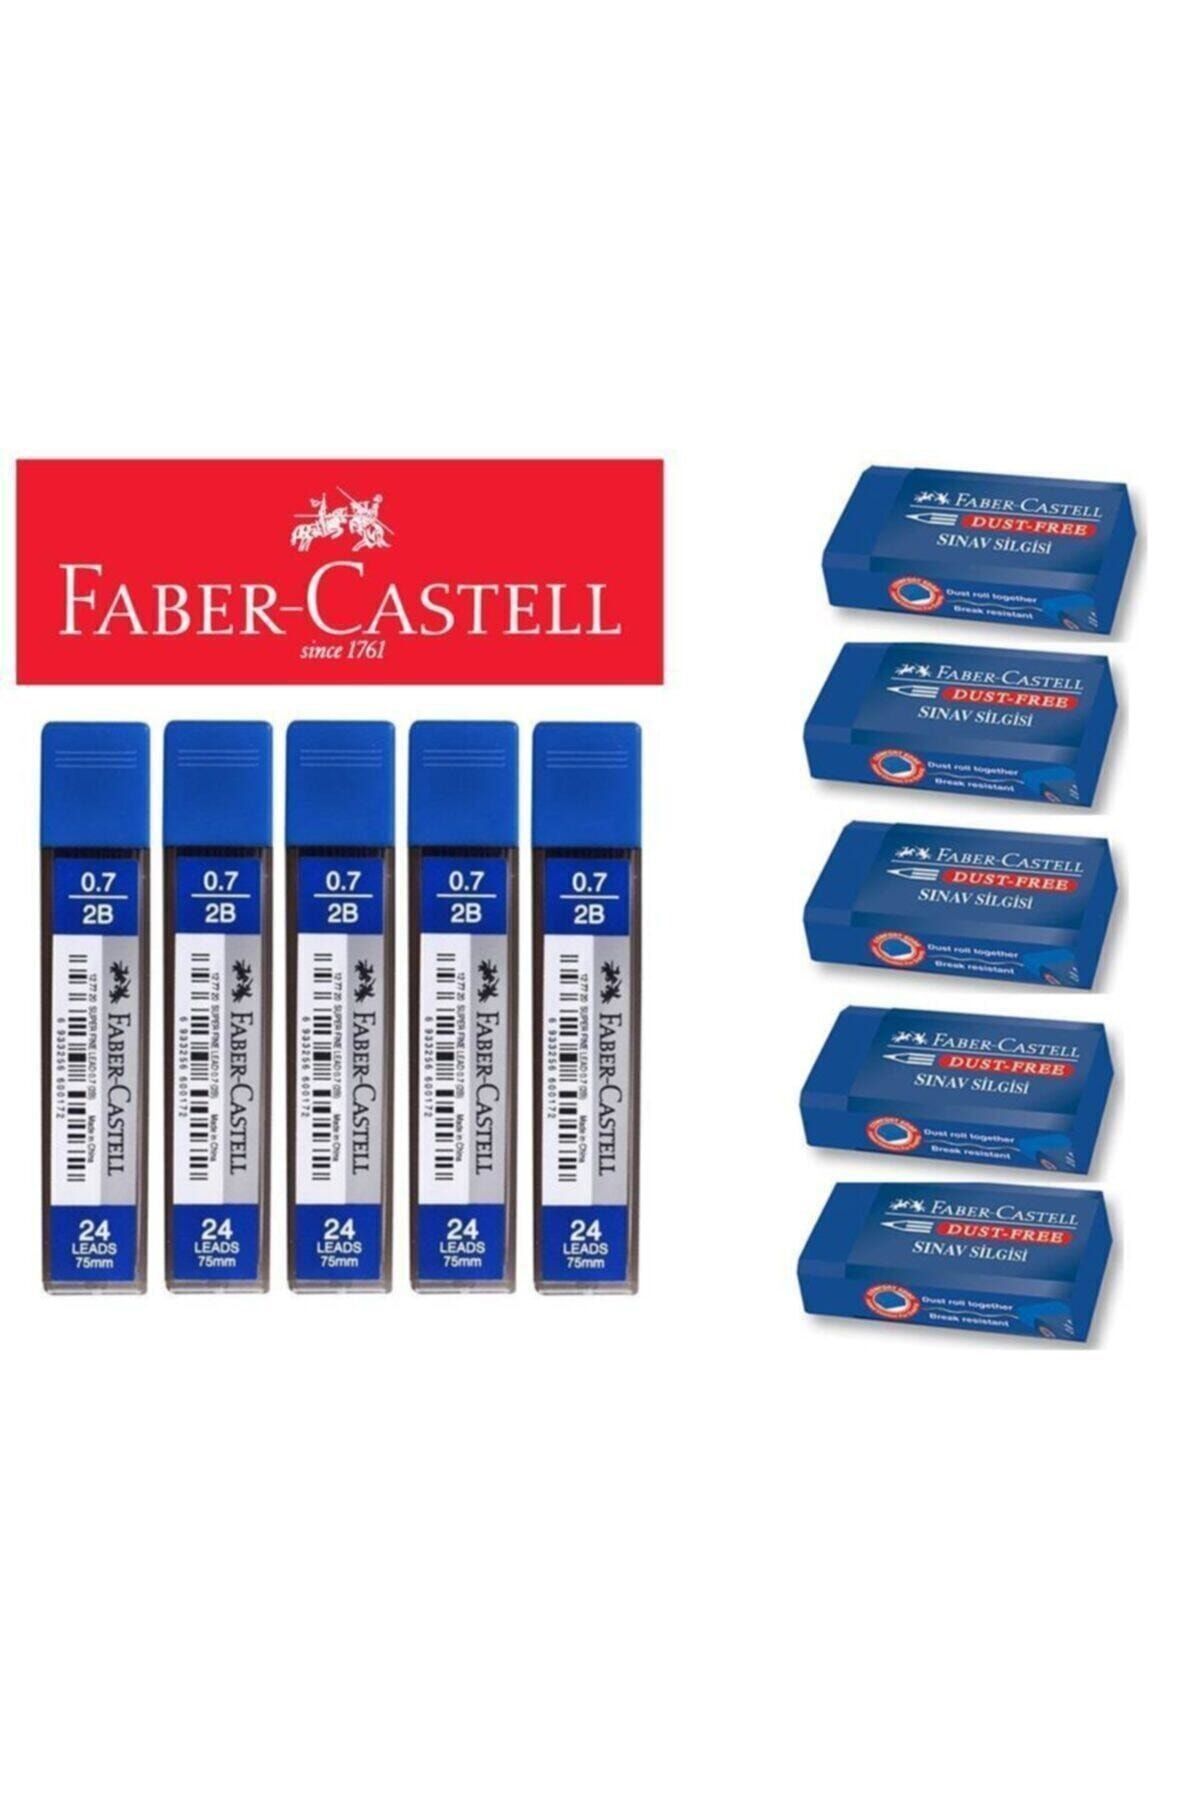 Faber Castell 5 Orta Boy Sınav Silgisi + 5 0.7 Uç Seti